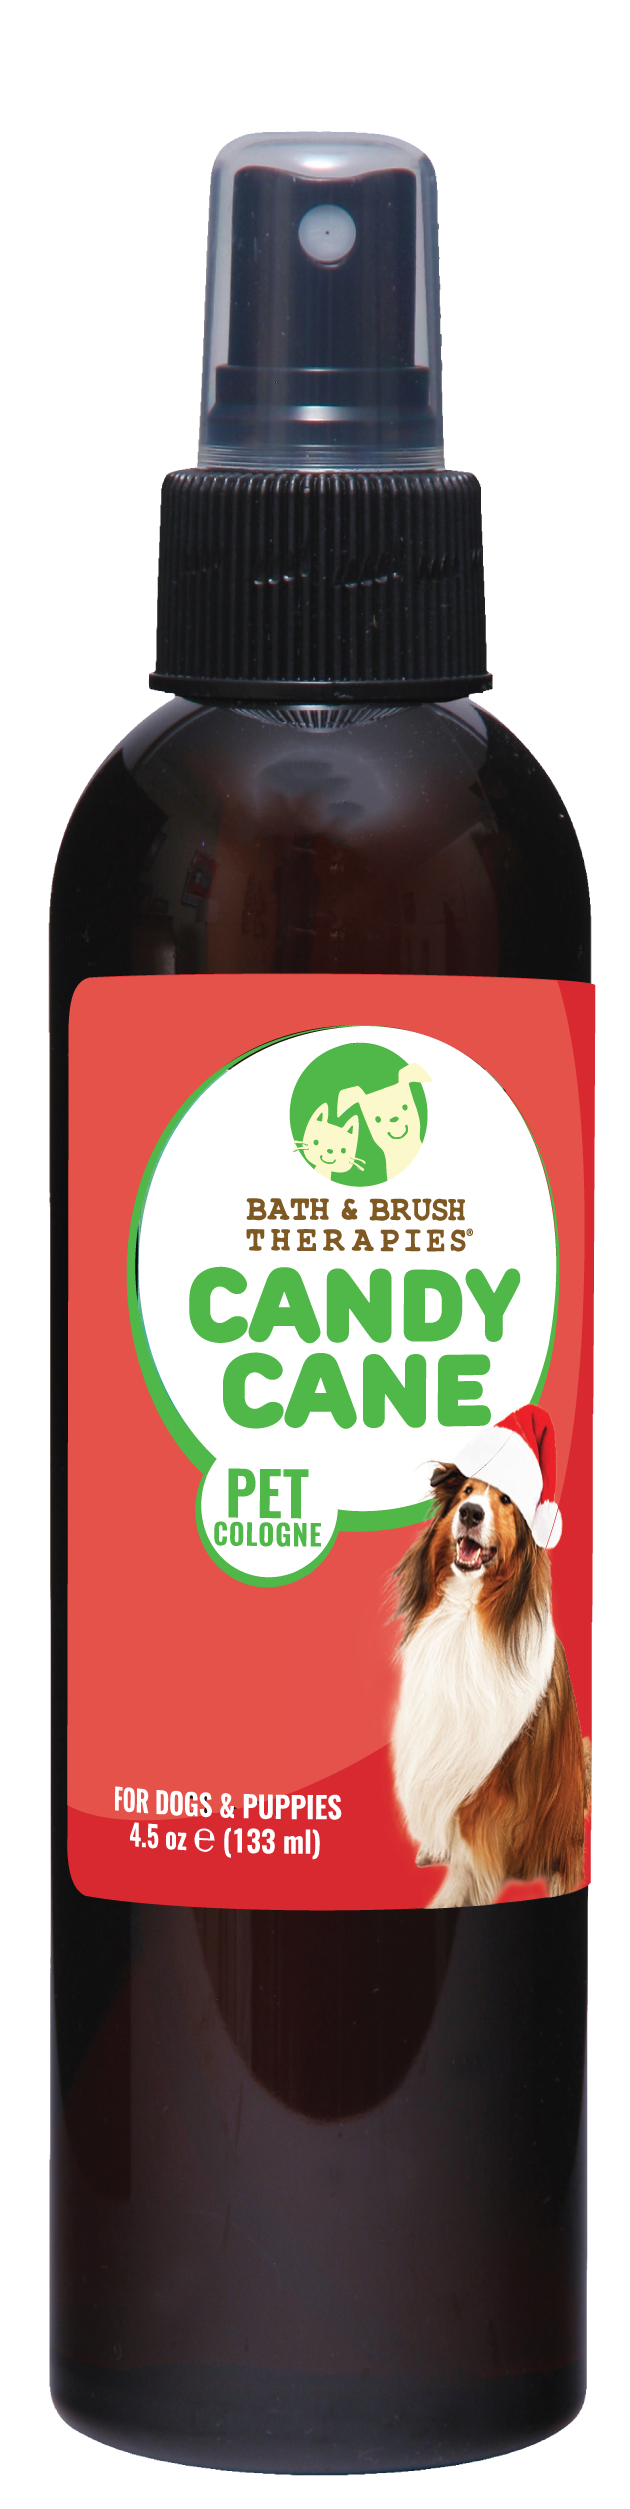 Candy Cane Pet Cologne